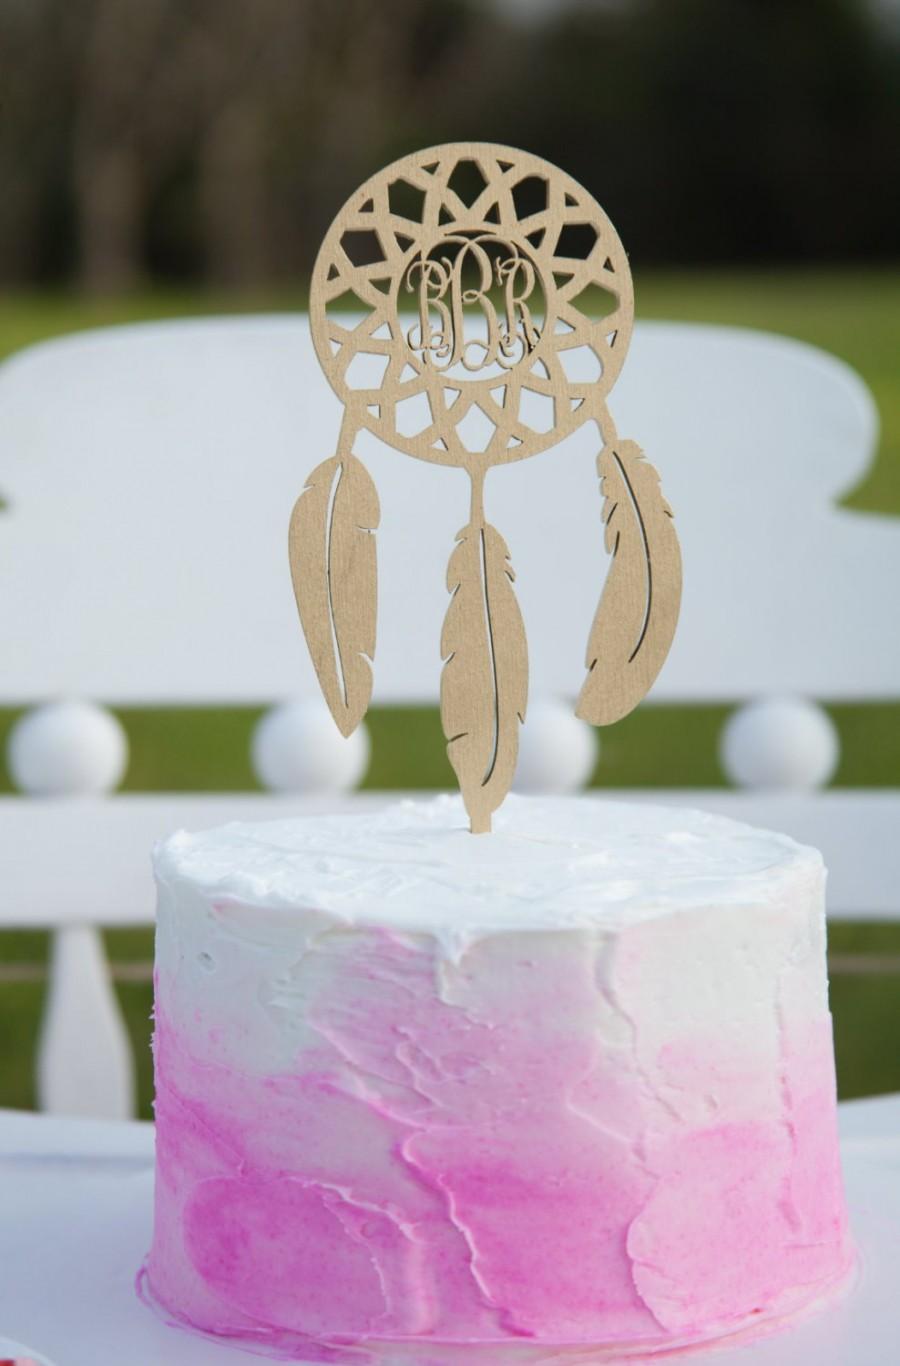 Mariage - Personalized Cake Topper - Monogram Dream Catcher Cake Topper - Birthday - Wedding - Wooden